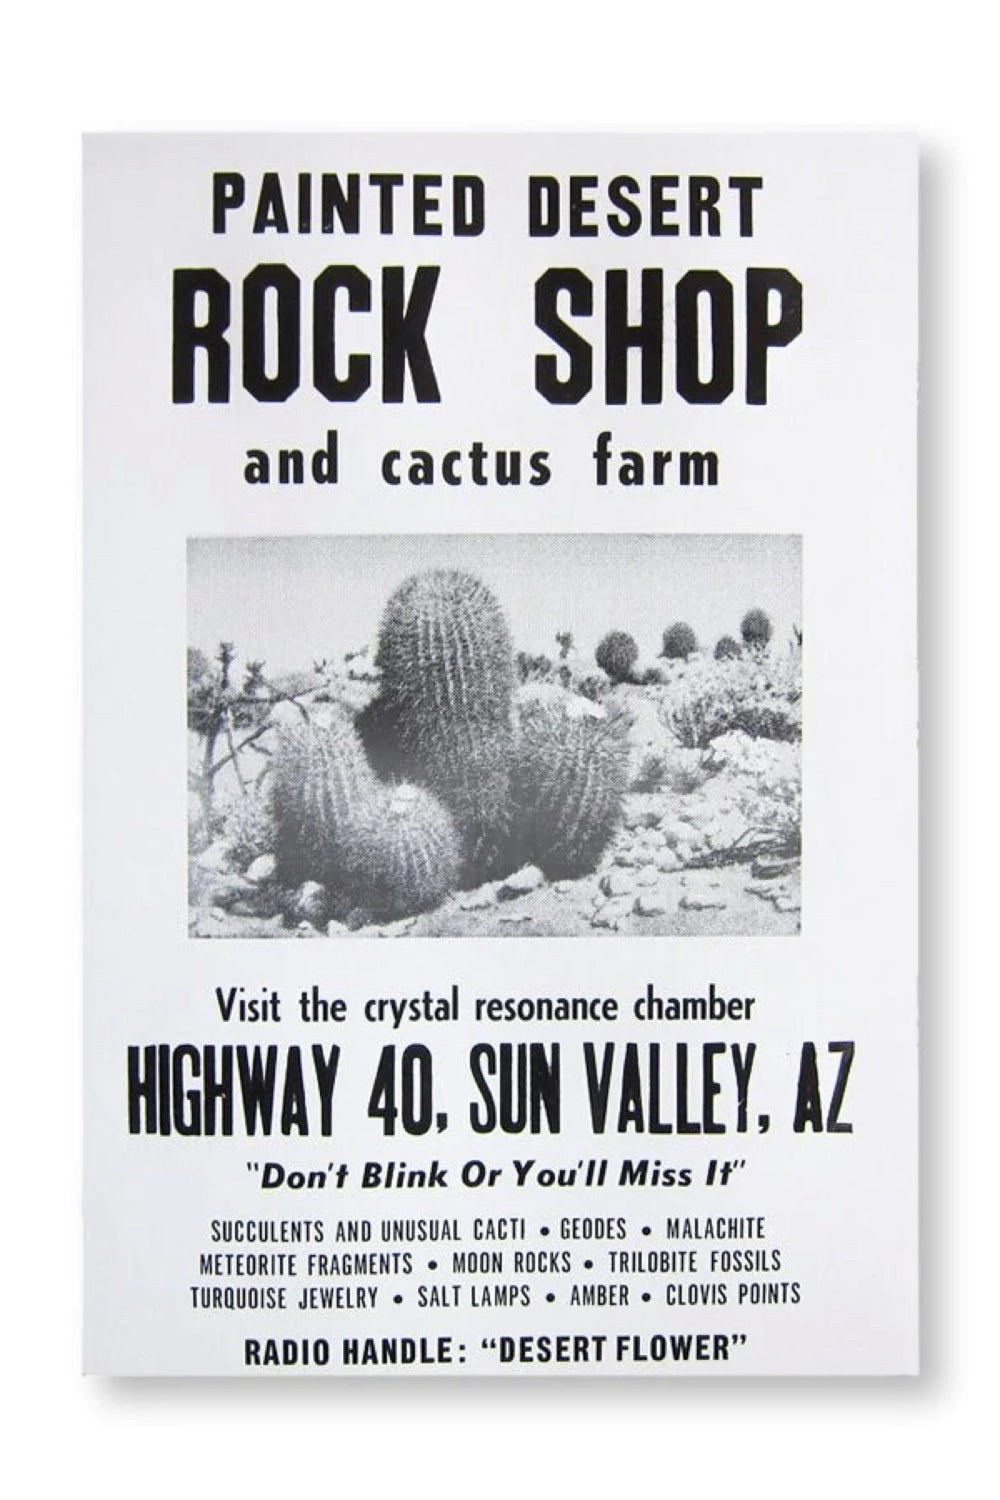 Rock Shop Roadside Poster